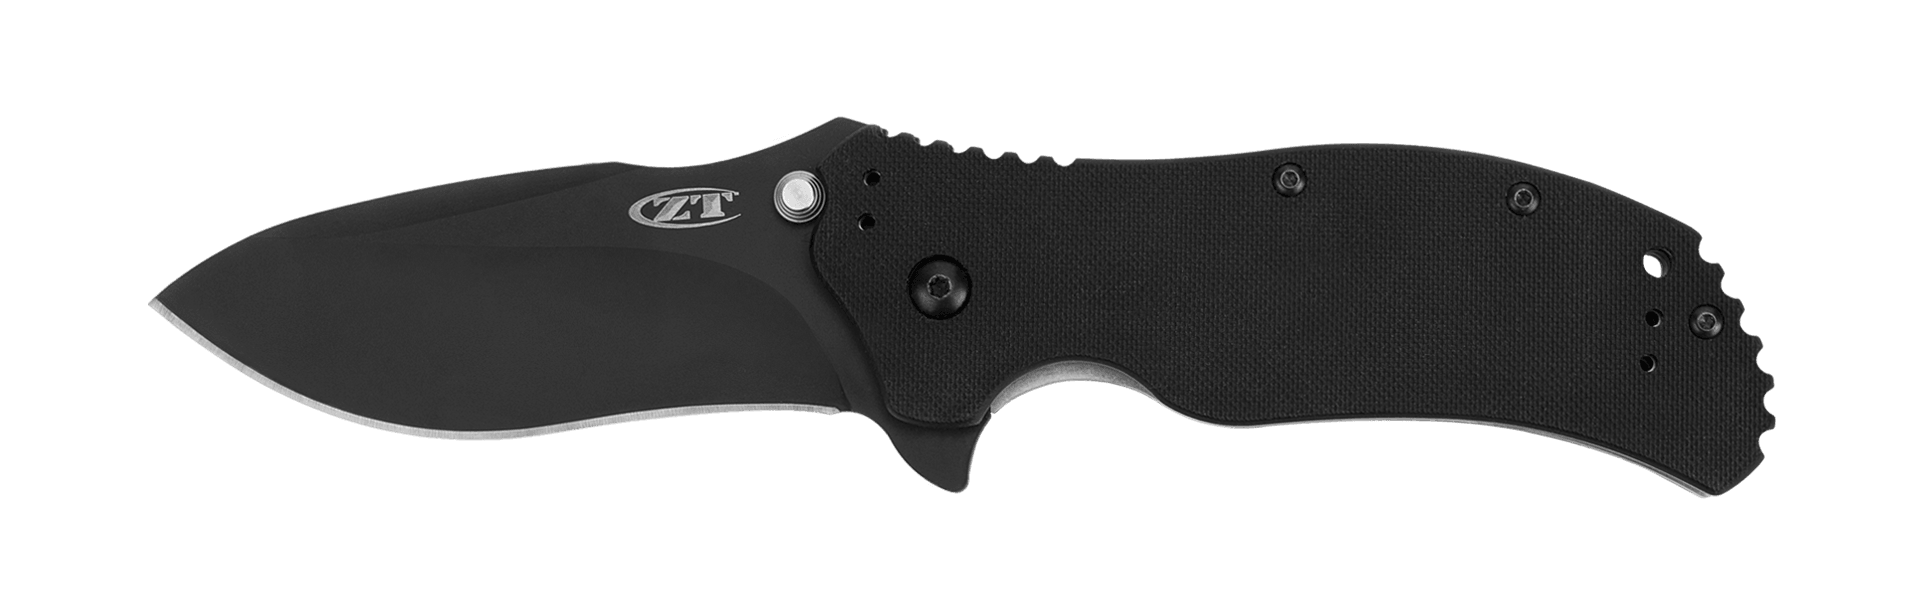 Zero Tolerance Linerlock A/O Black G10 DLC coated CPM S30V - Knives.mx